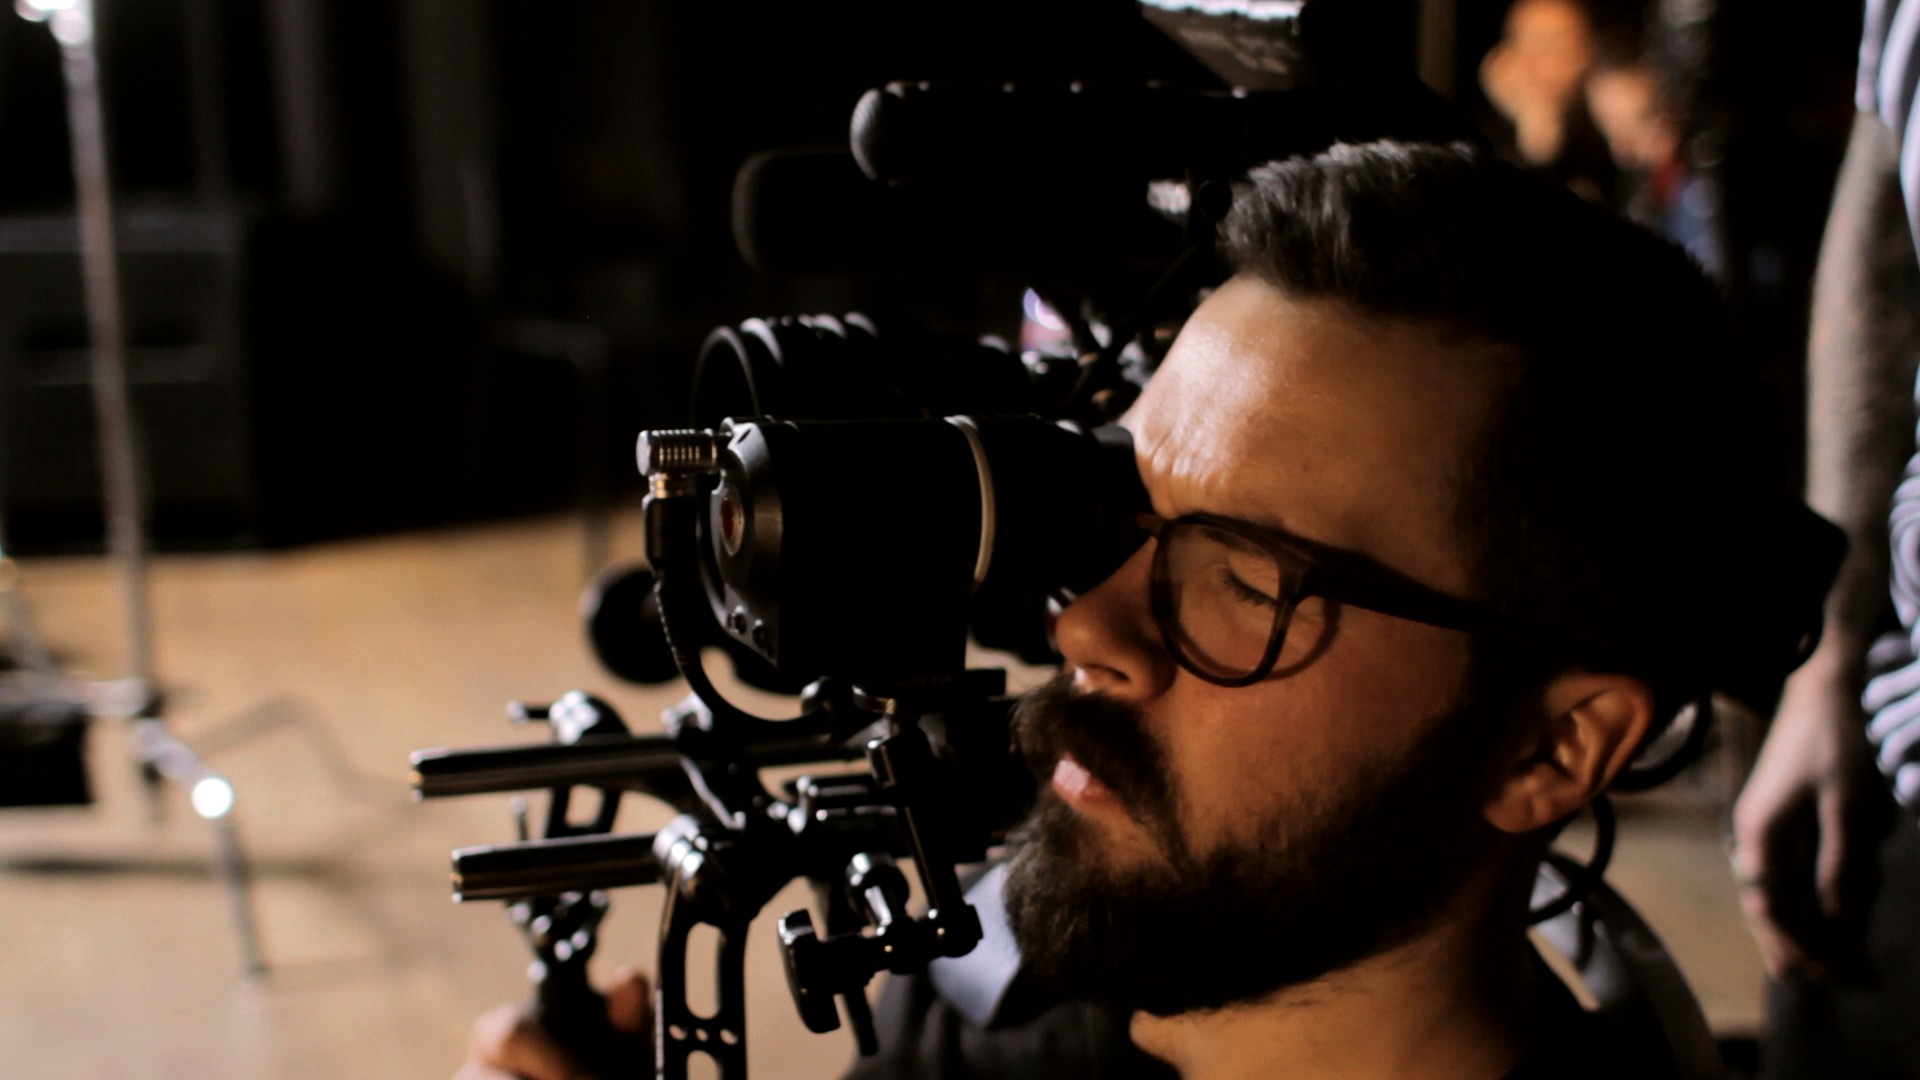 Stian Servoss durring Madcon - Don't Worry music video shoot.